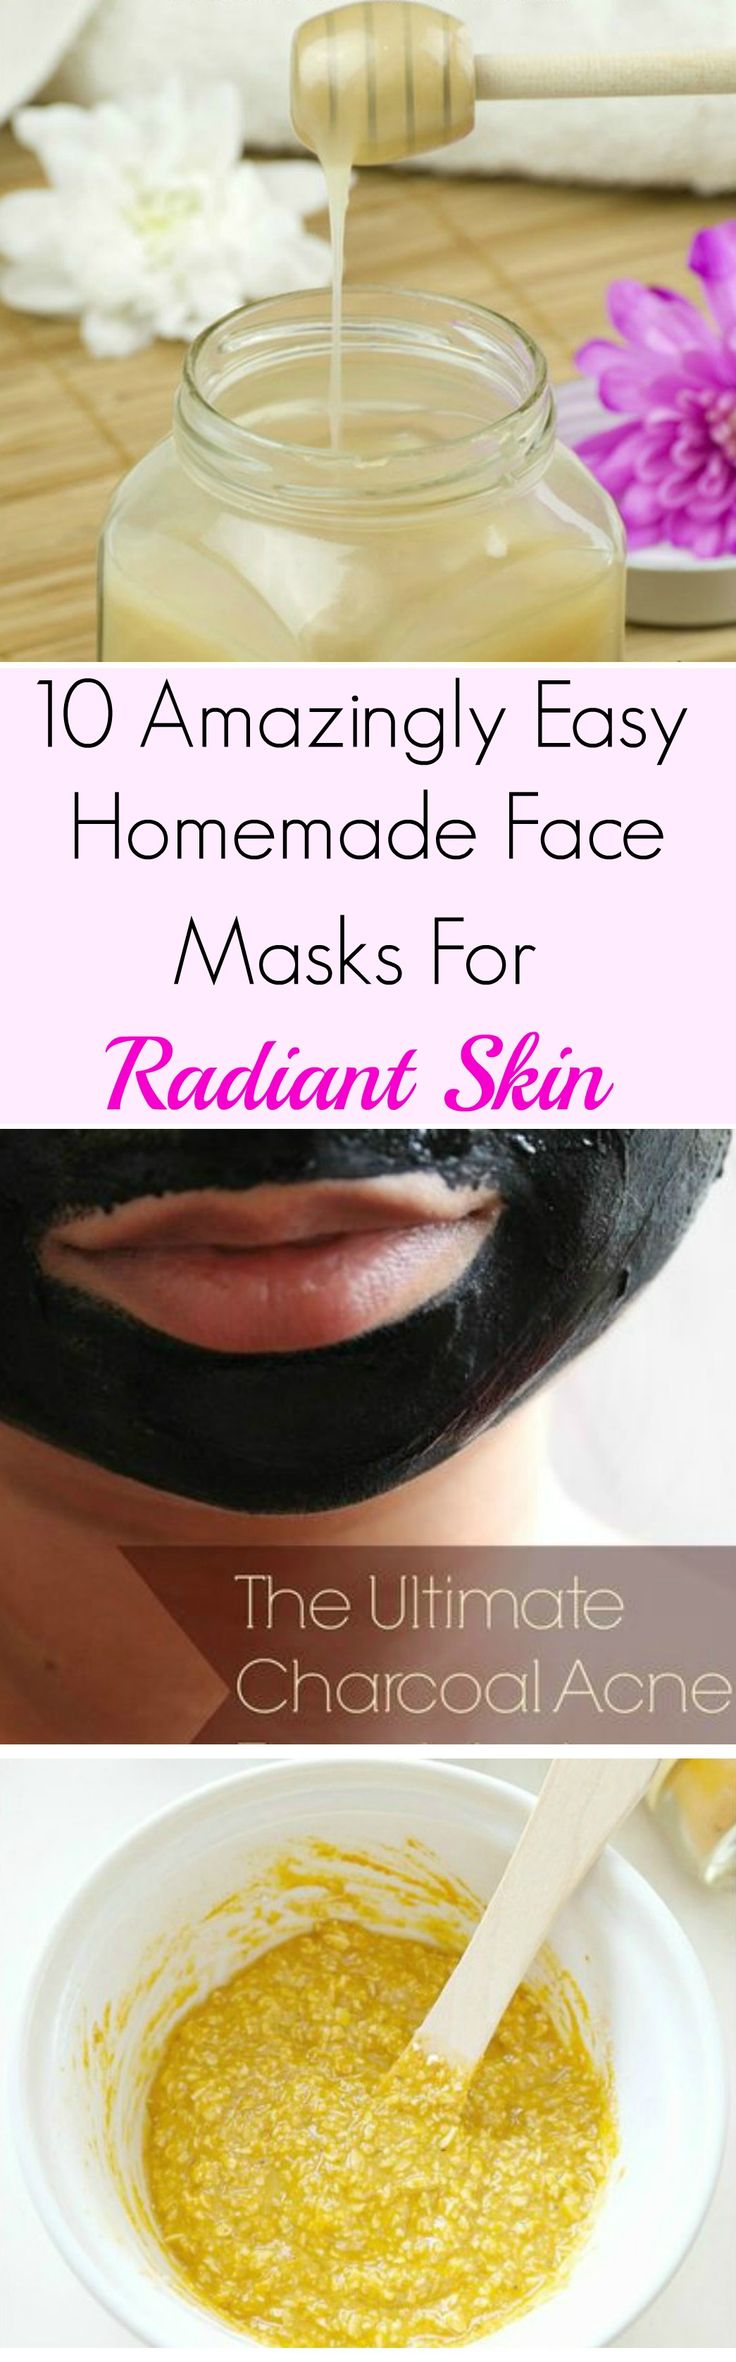 10 Amazingly Easy Homemade Face Masks For Radiant Skin. Wonderful list of DIY fa...